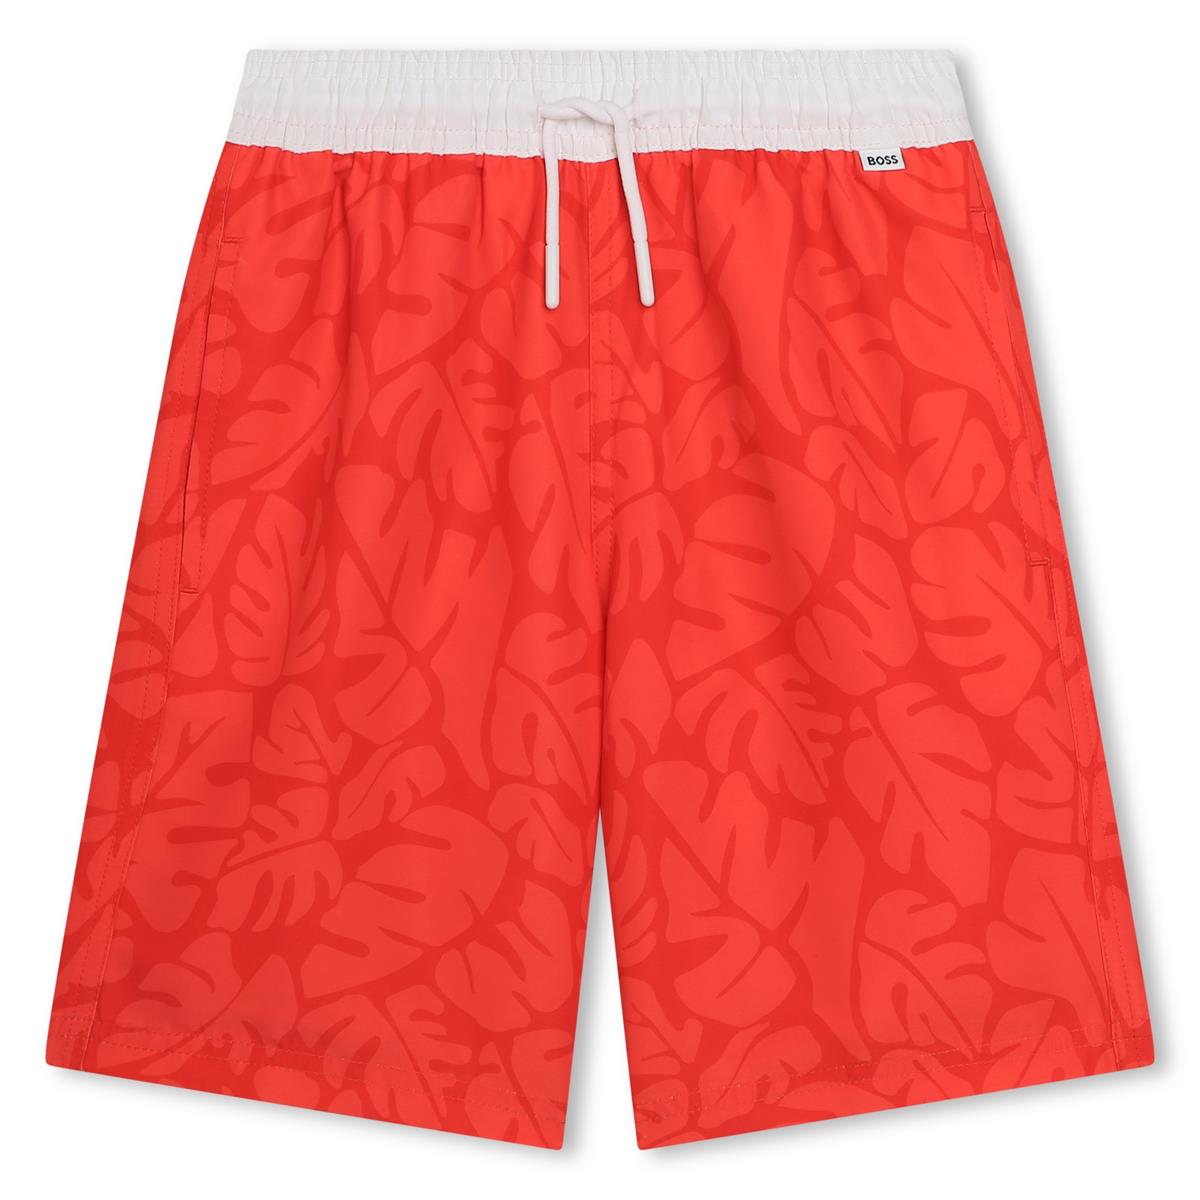 Boys Orange Swim Shorts